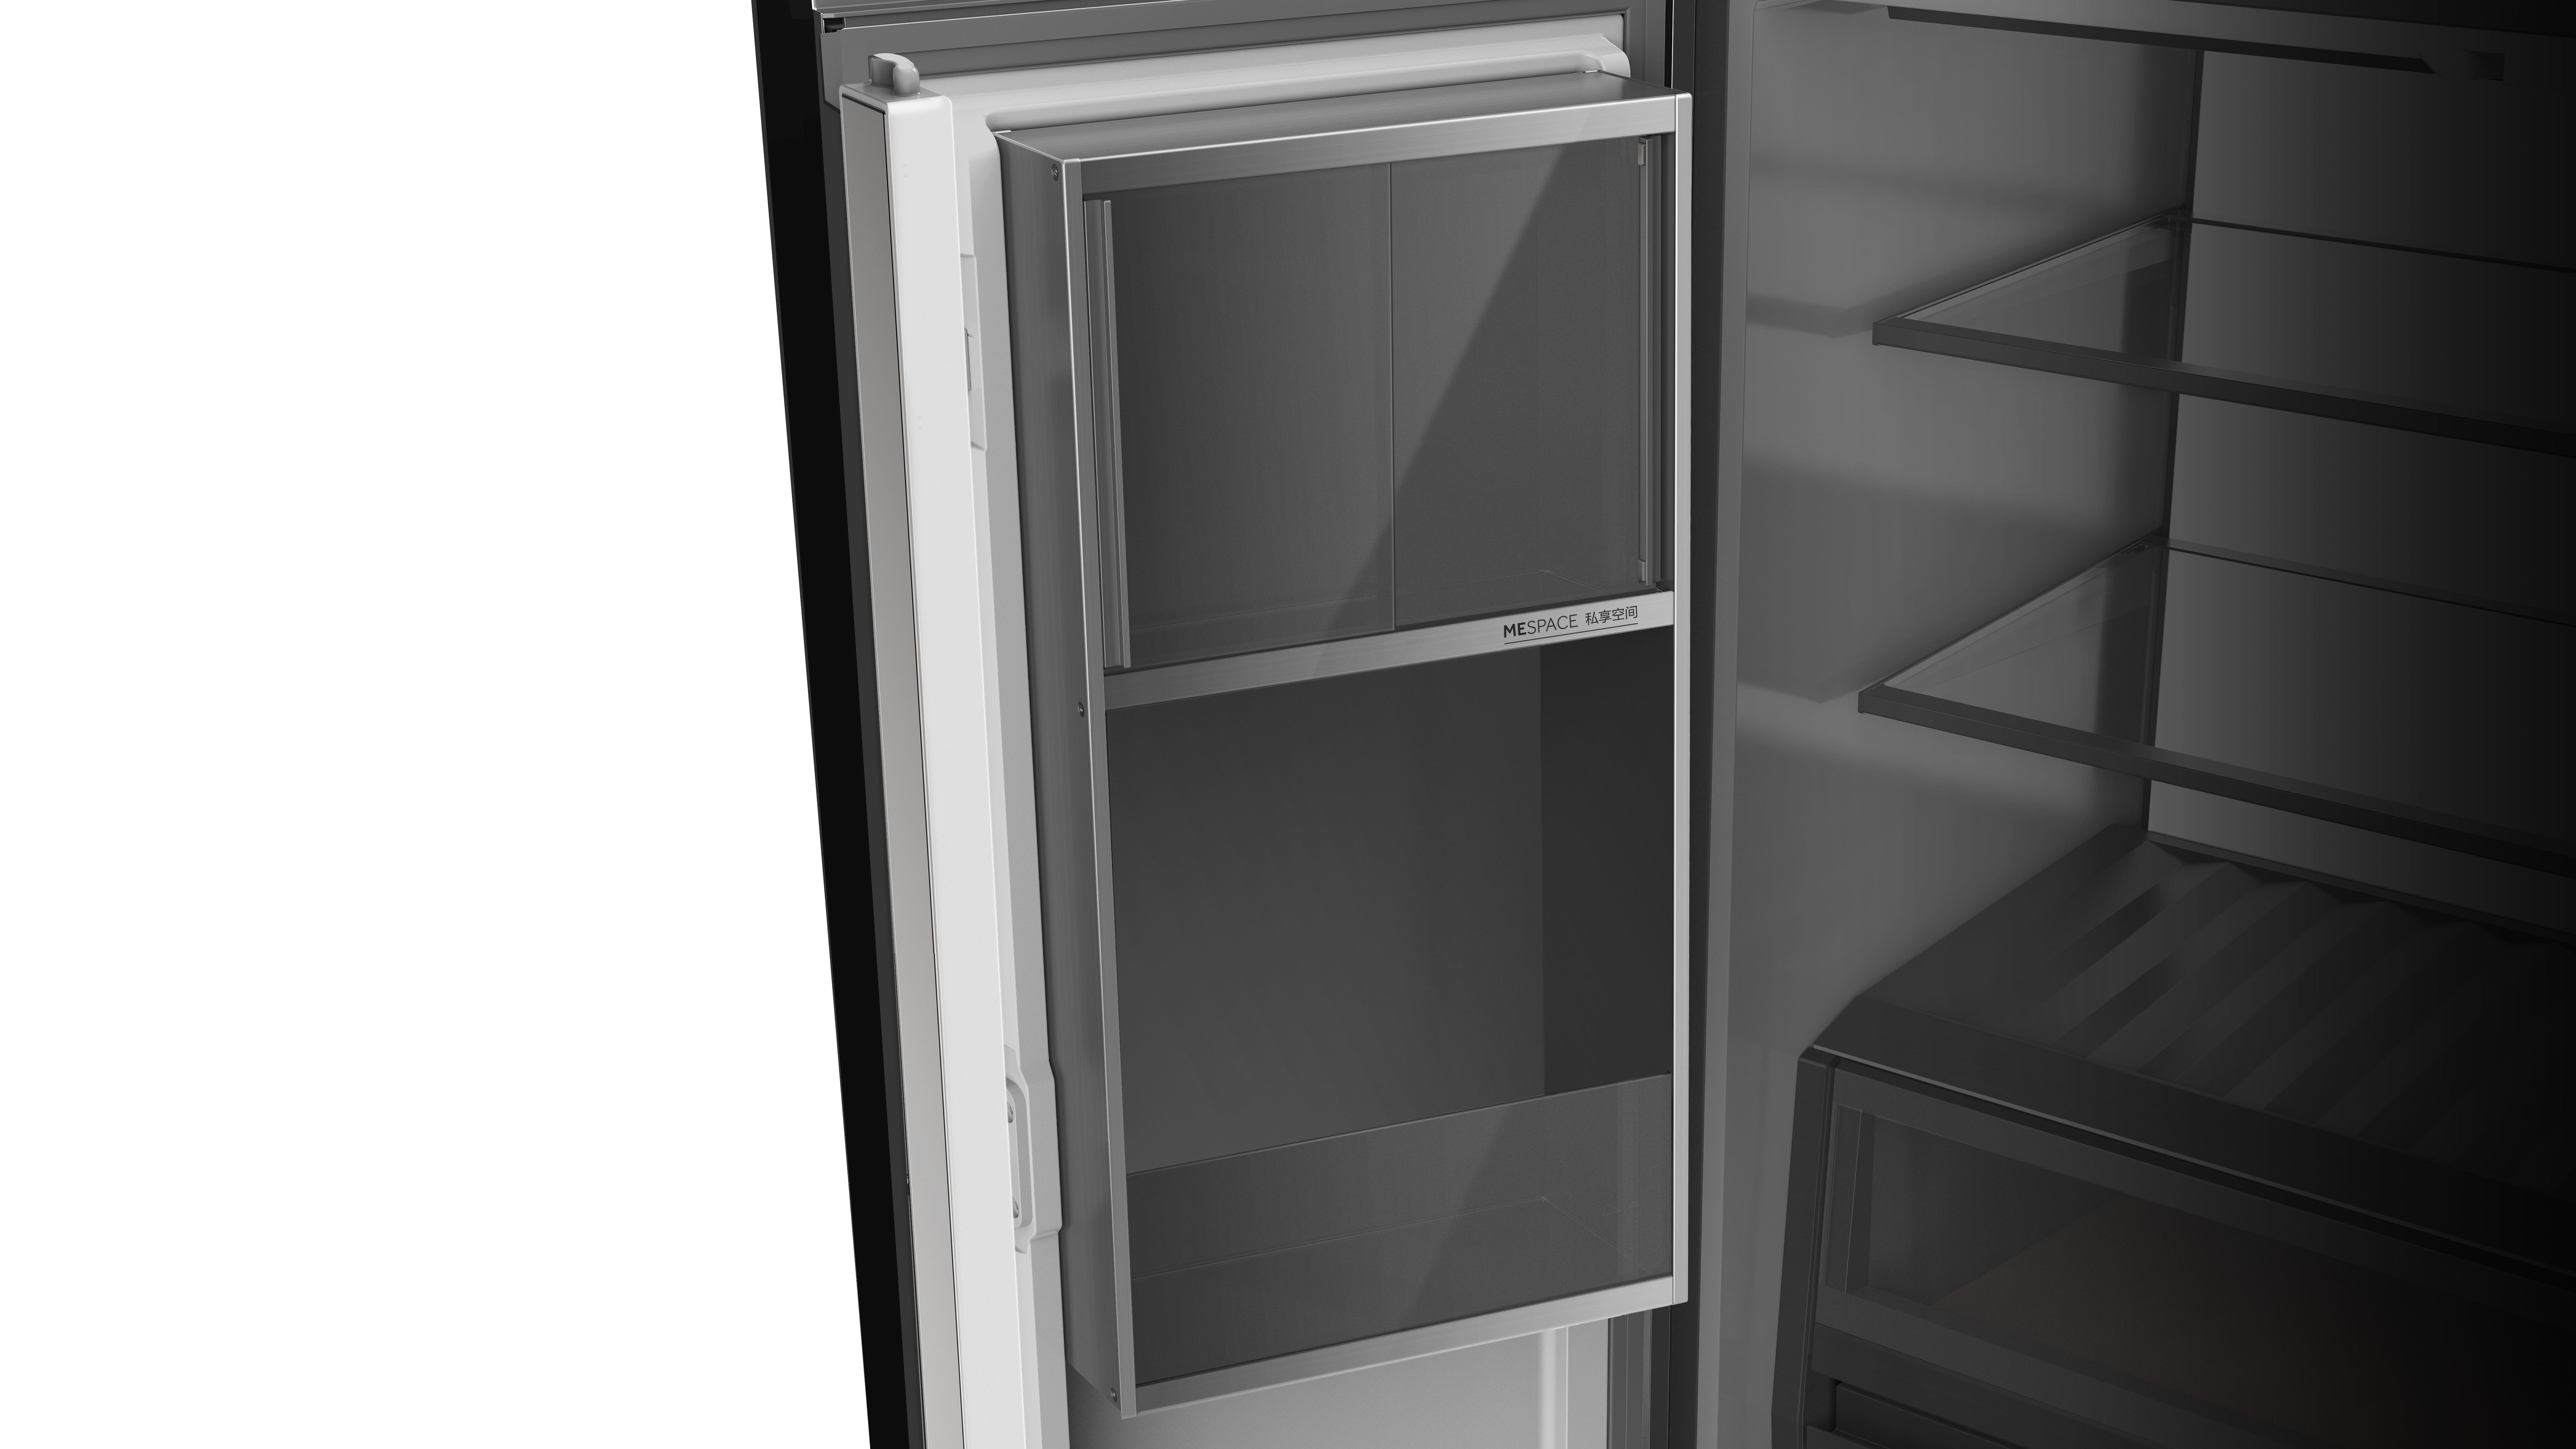 Casarte Designer Series Refrigerator